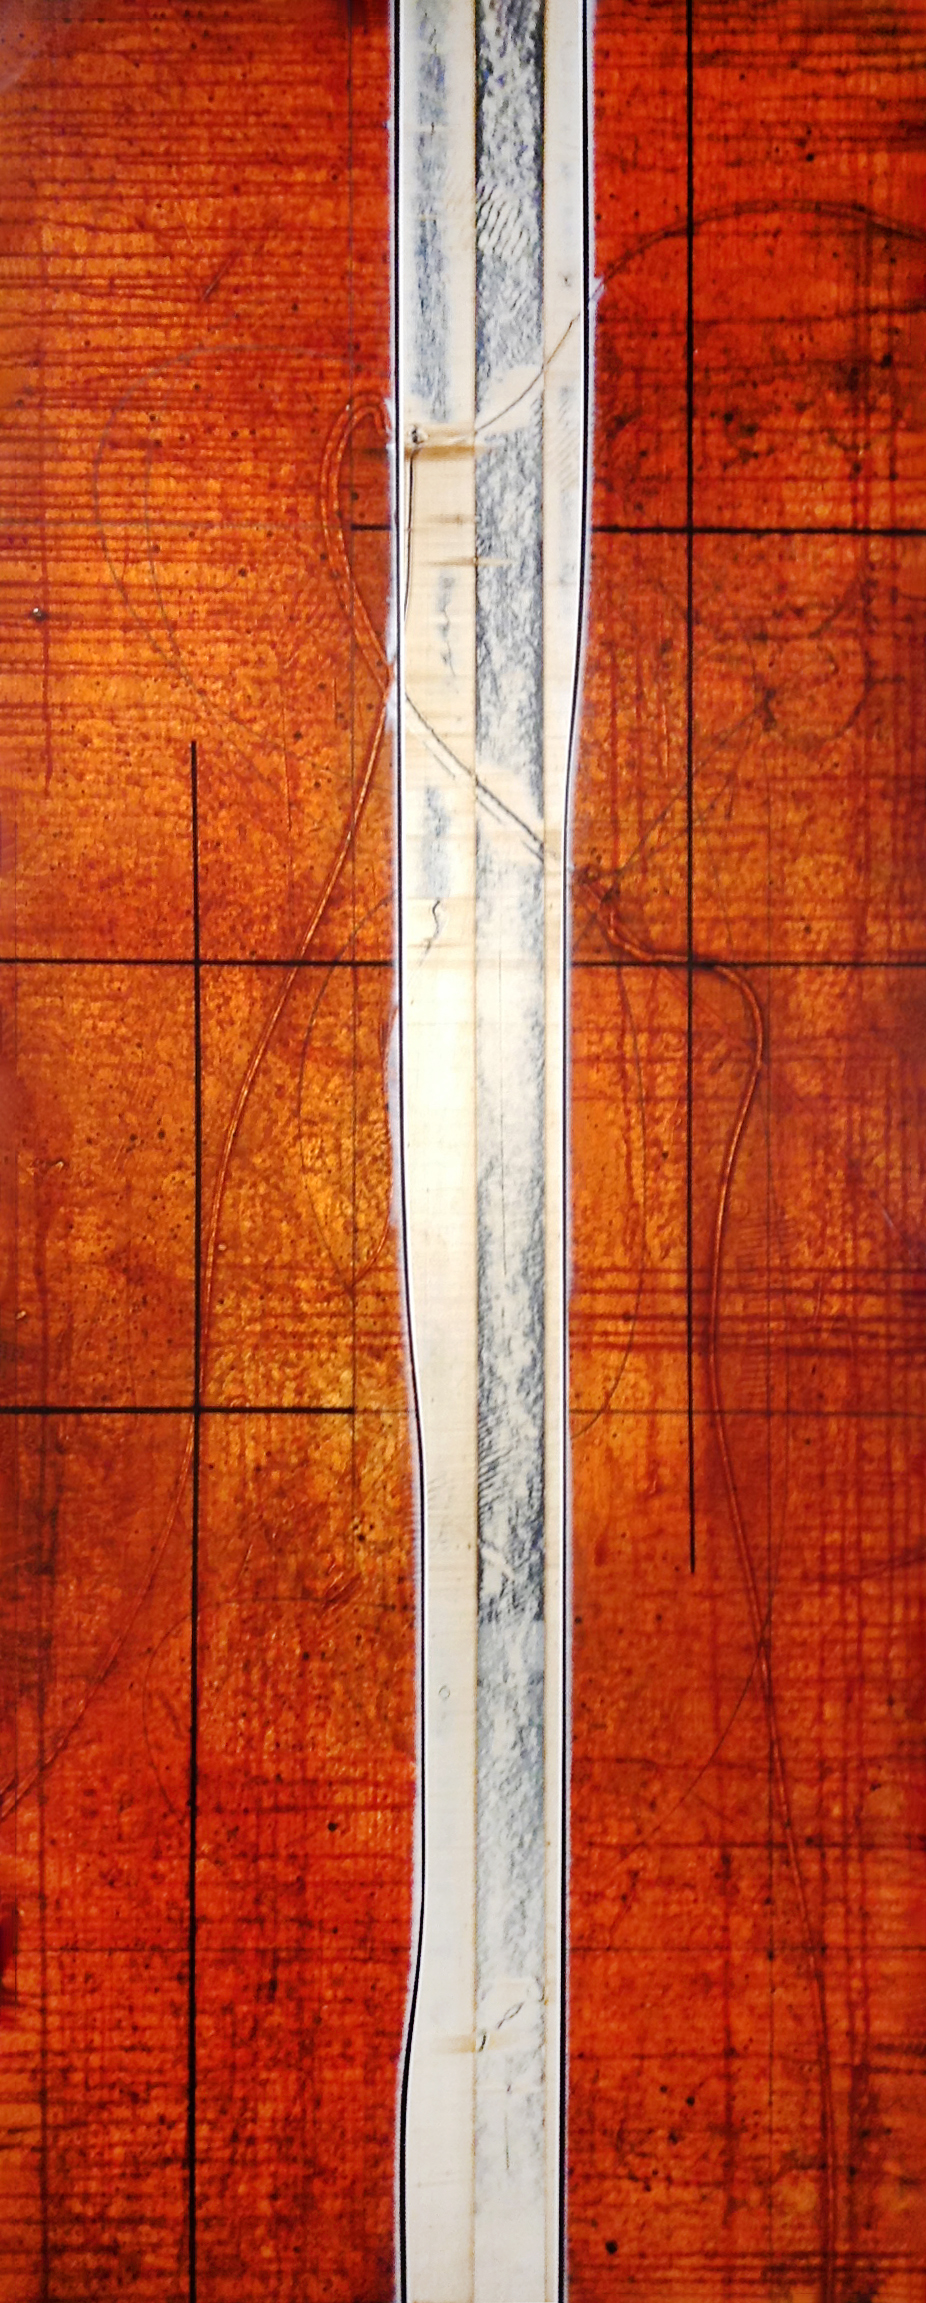 BRIDGE BURNER (2), acrylic on panel, 70 x 28 inches